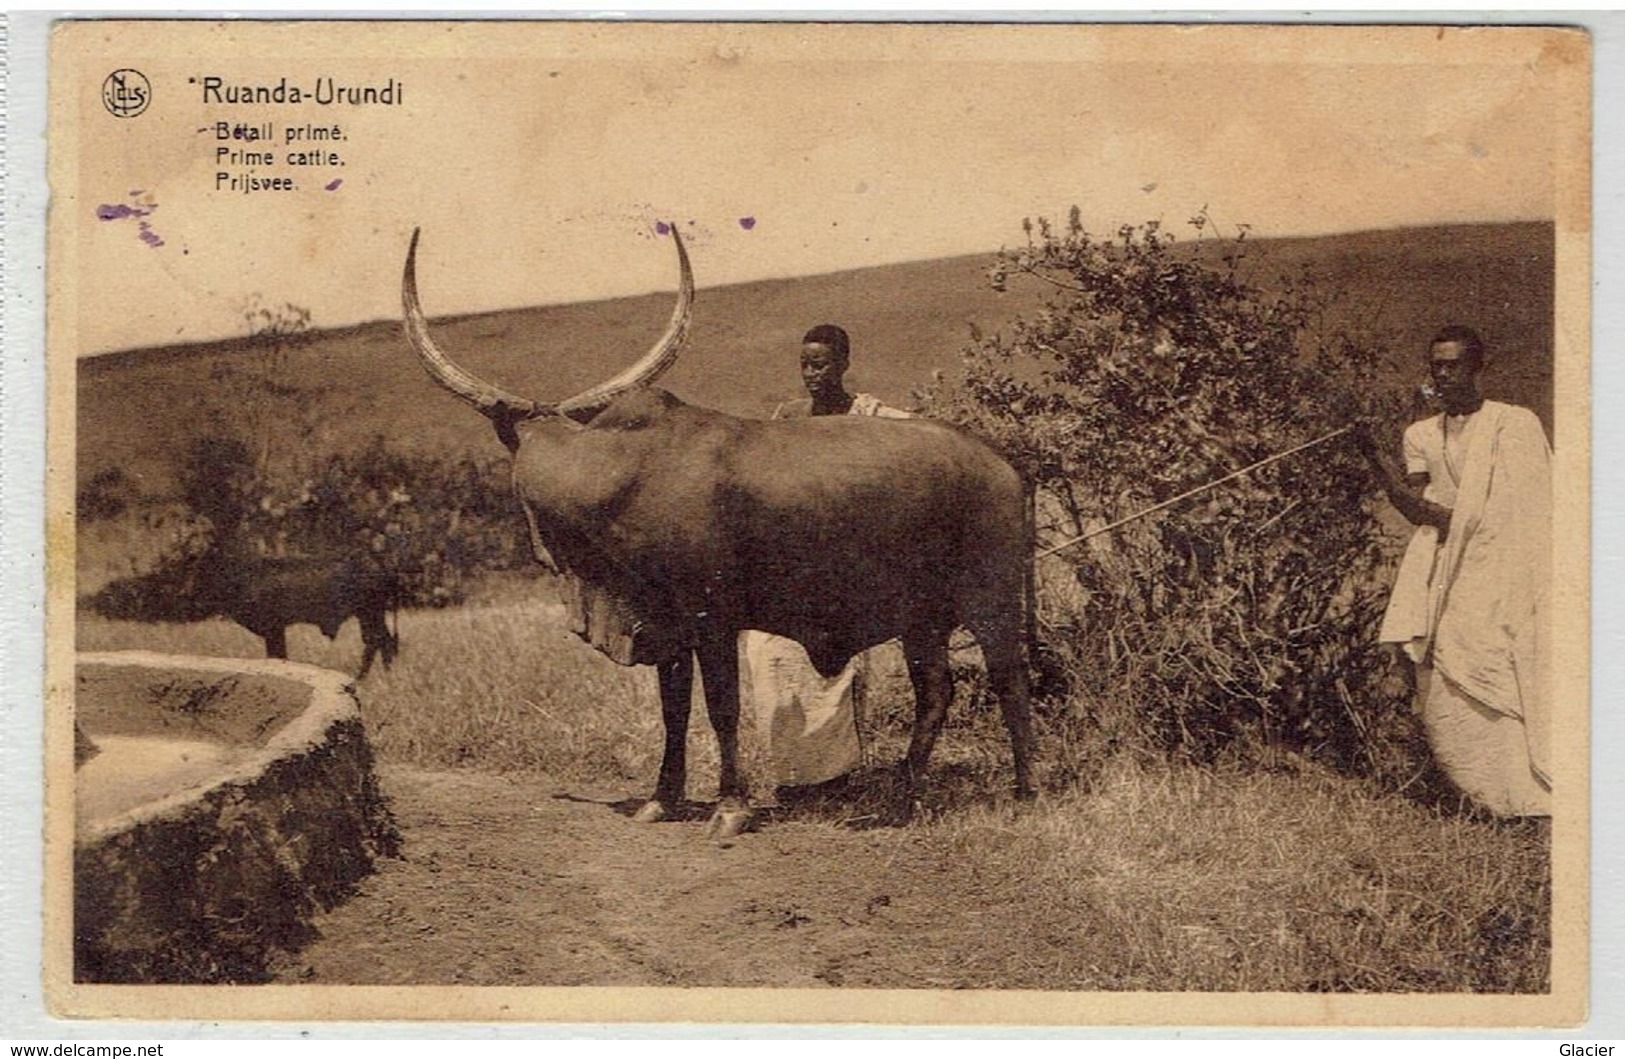 RUANDA-URUNDI - Bétail Primé - Prijsvee - Prime Cattle - Ruanda Urundi